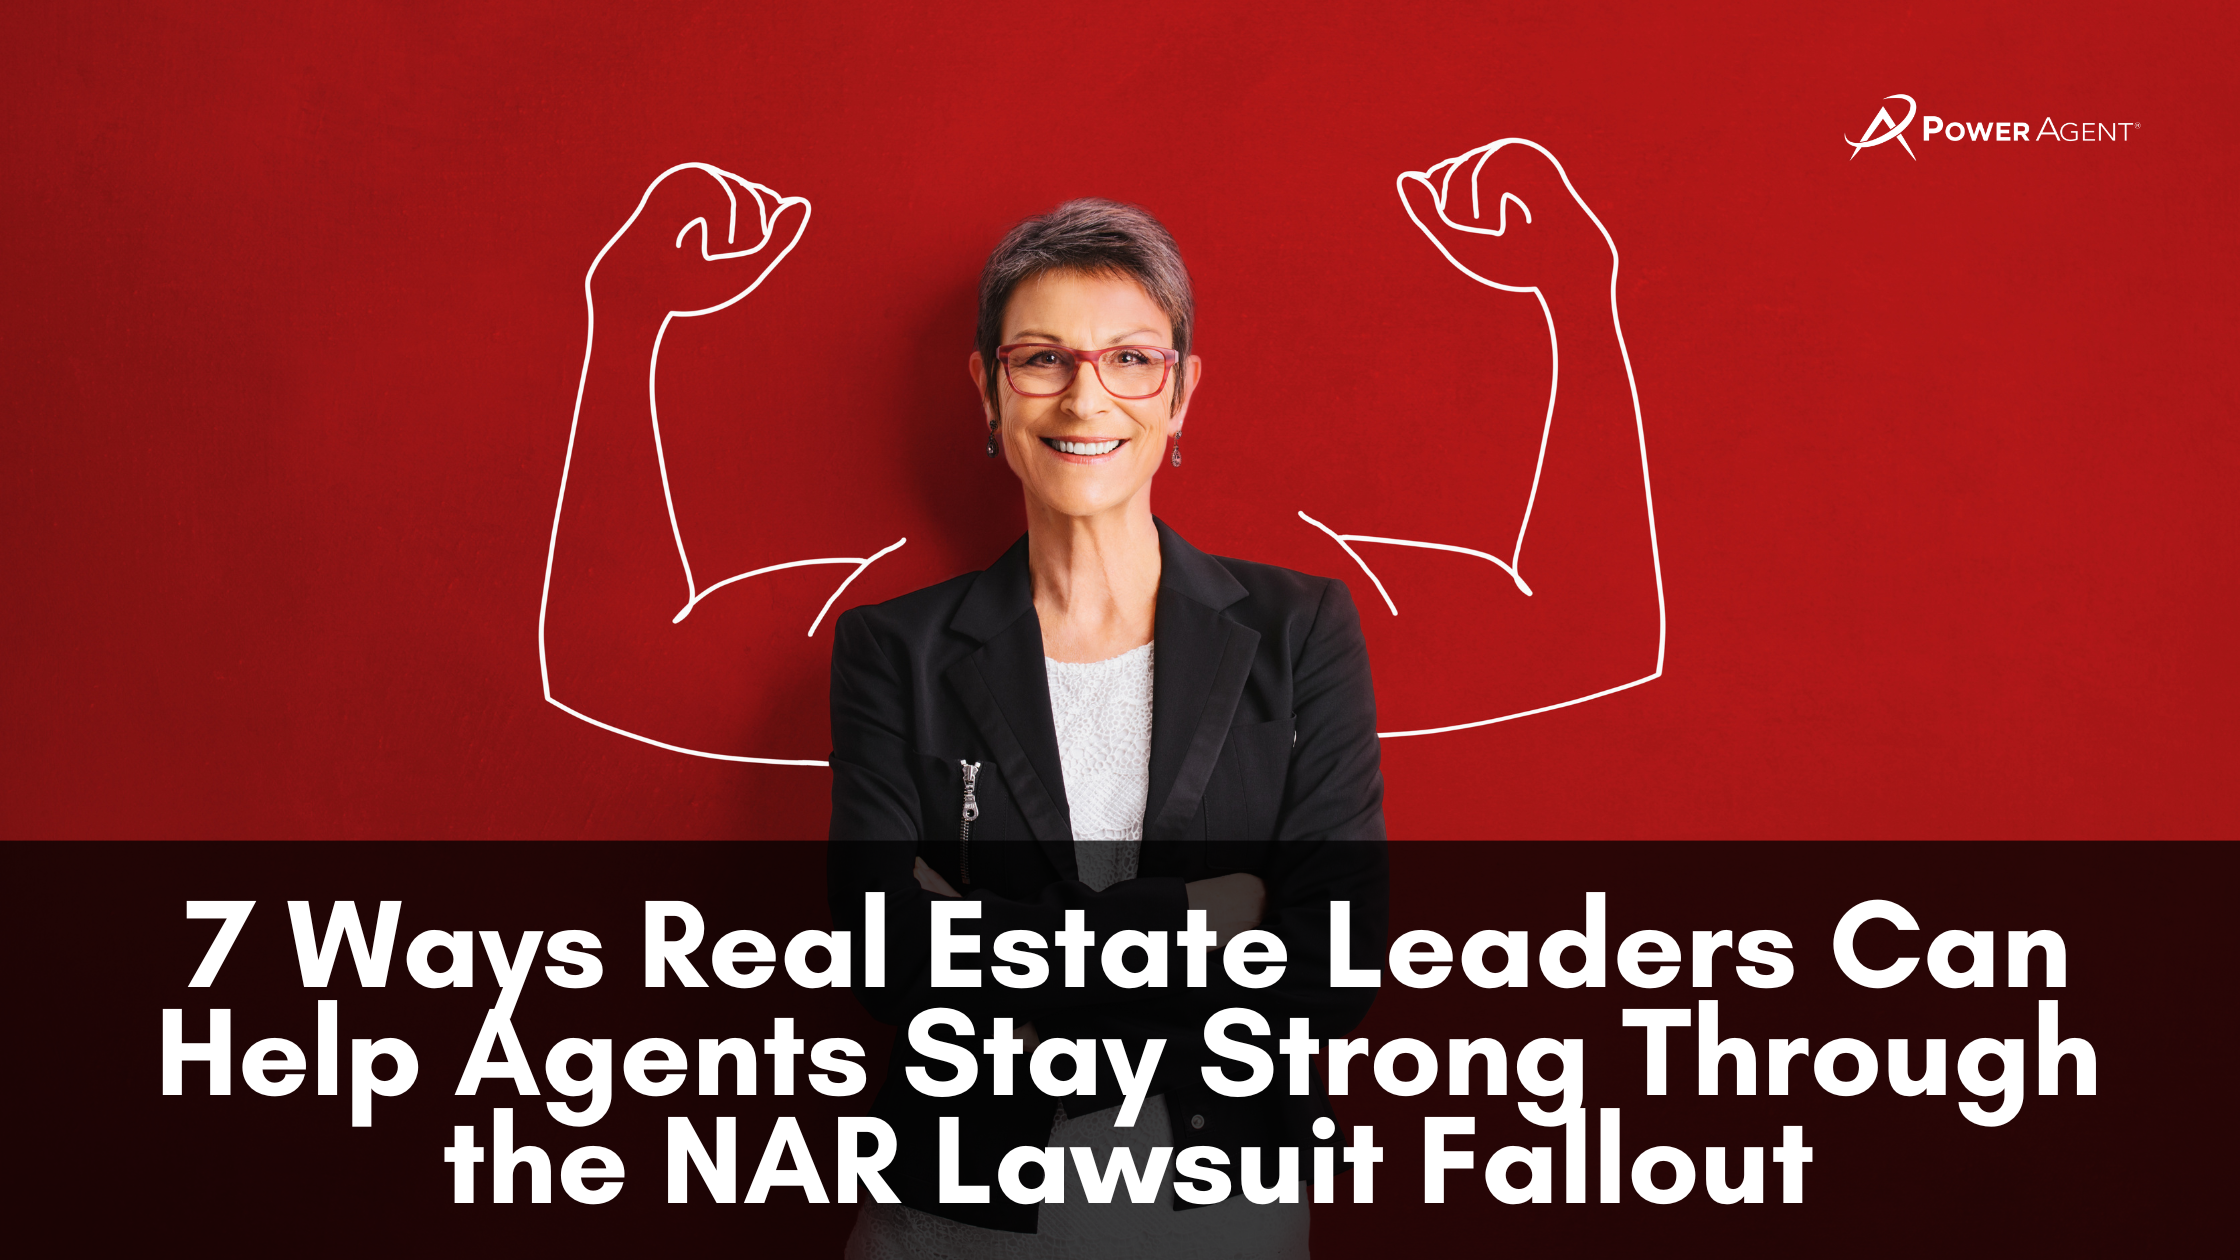 NAR lawsuit, Nar Commission Lawsuit, NAR Antitrust Class Action Lawsuit, NAR lawsuit training, real estate leadership